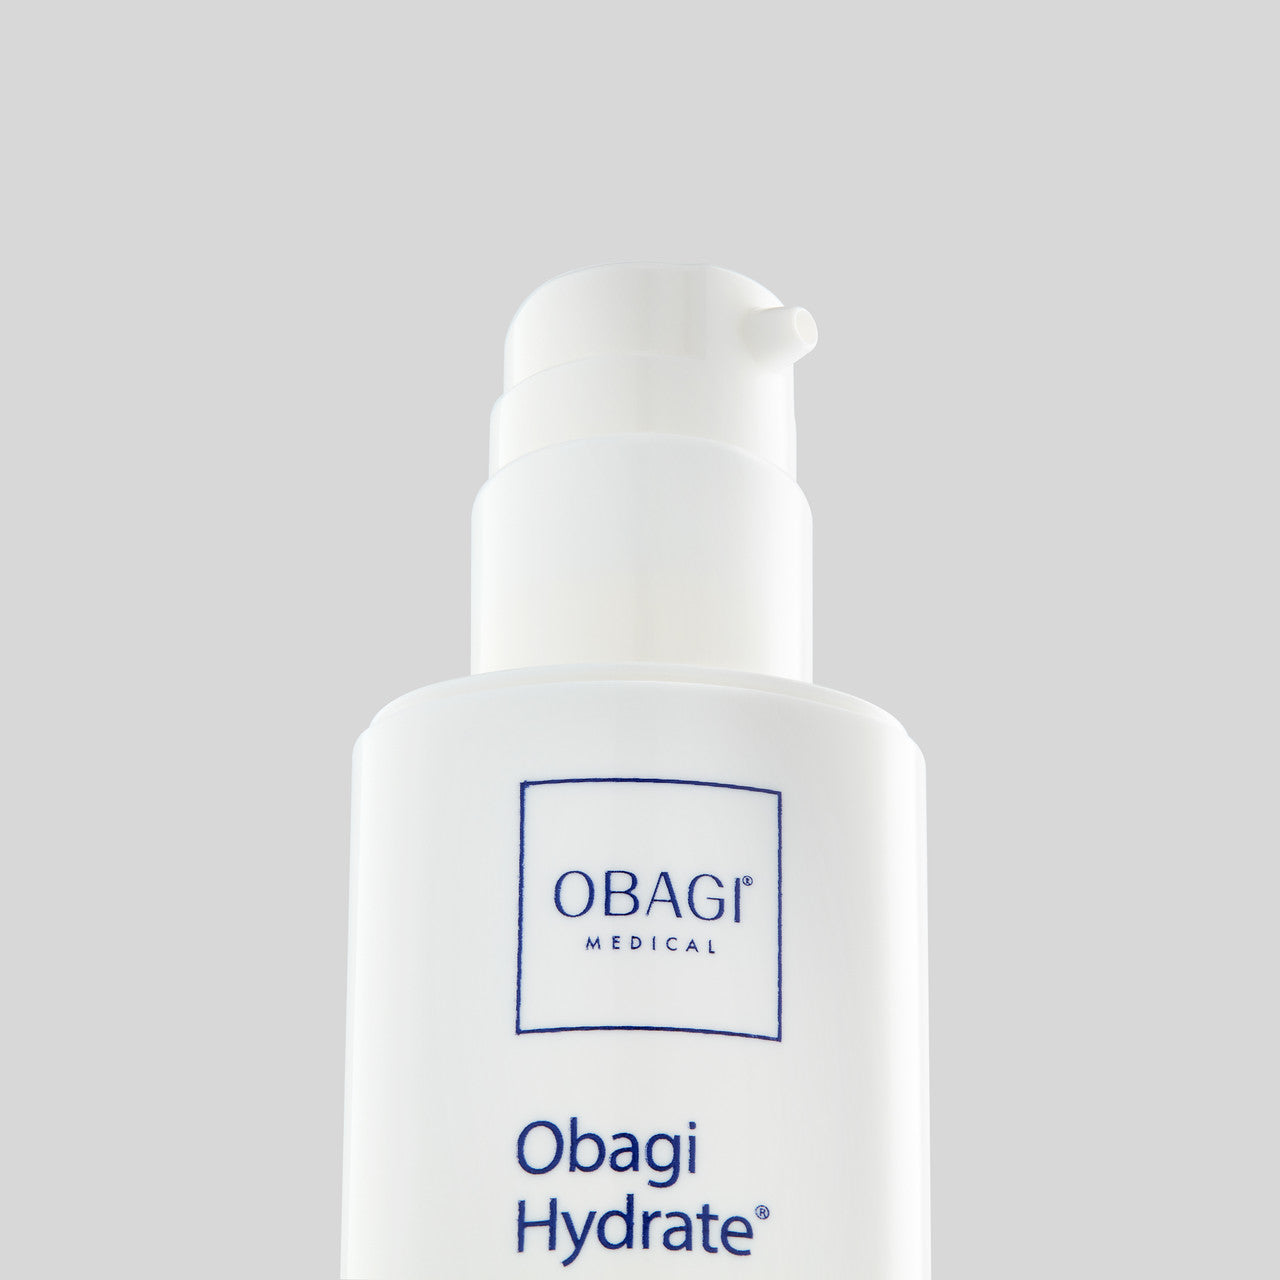 OBAGI Hydrate - Hydrate Facial Moisturizer 48g